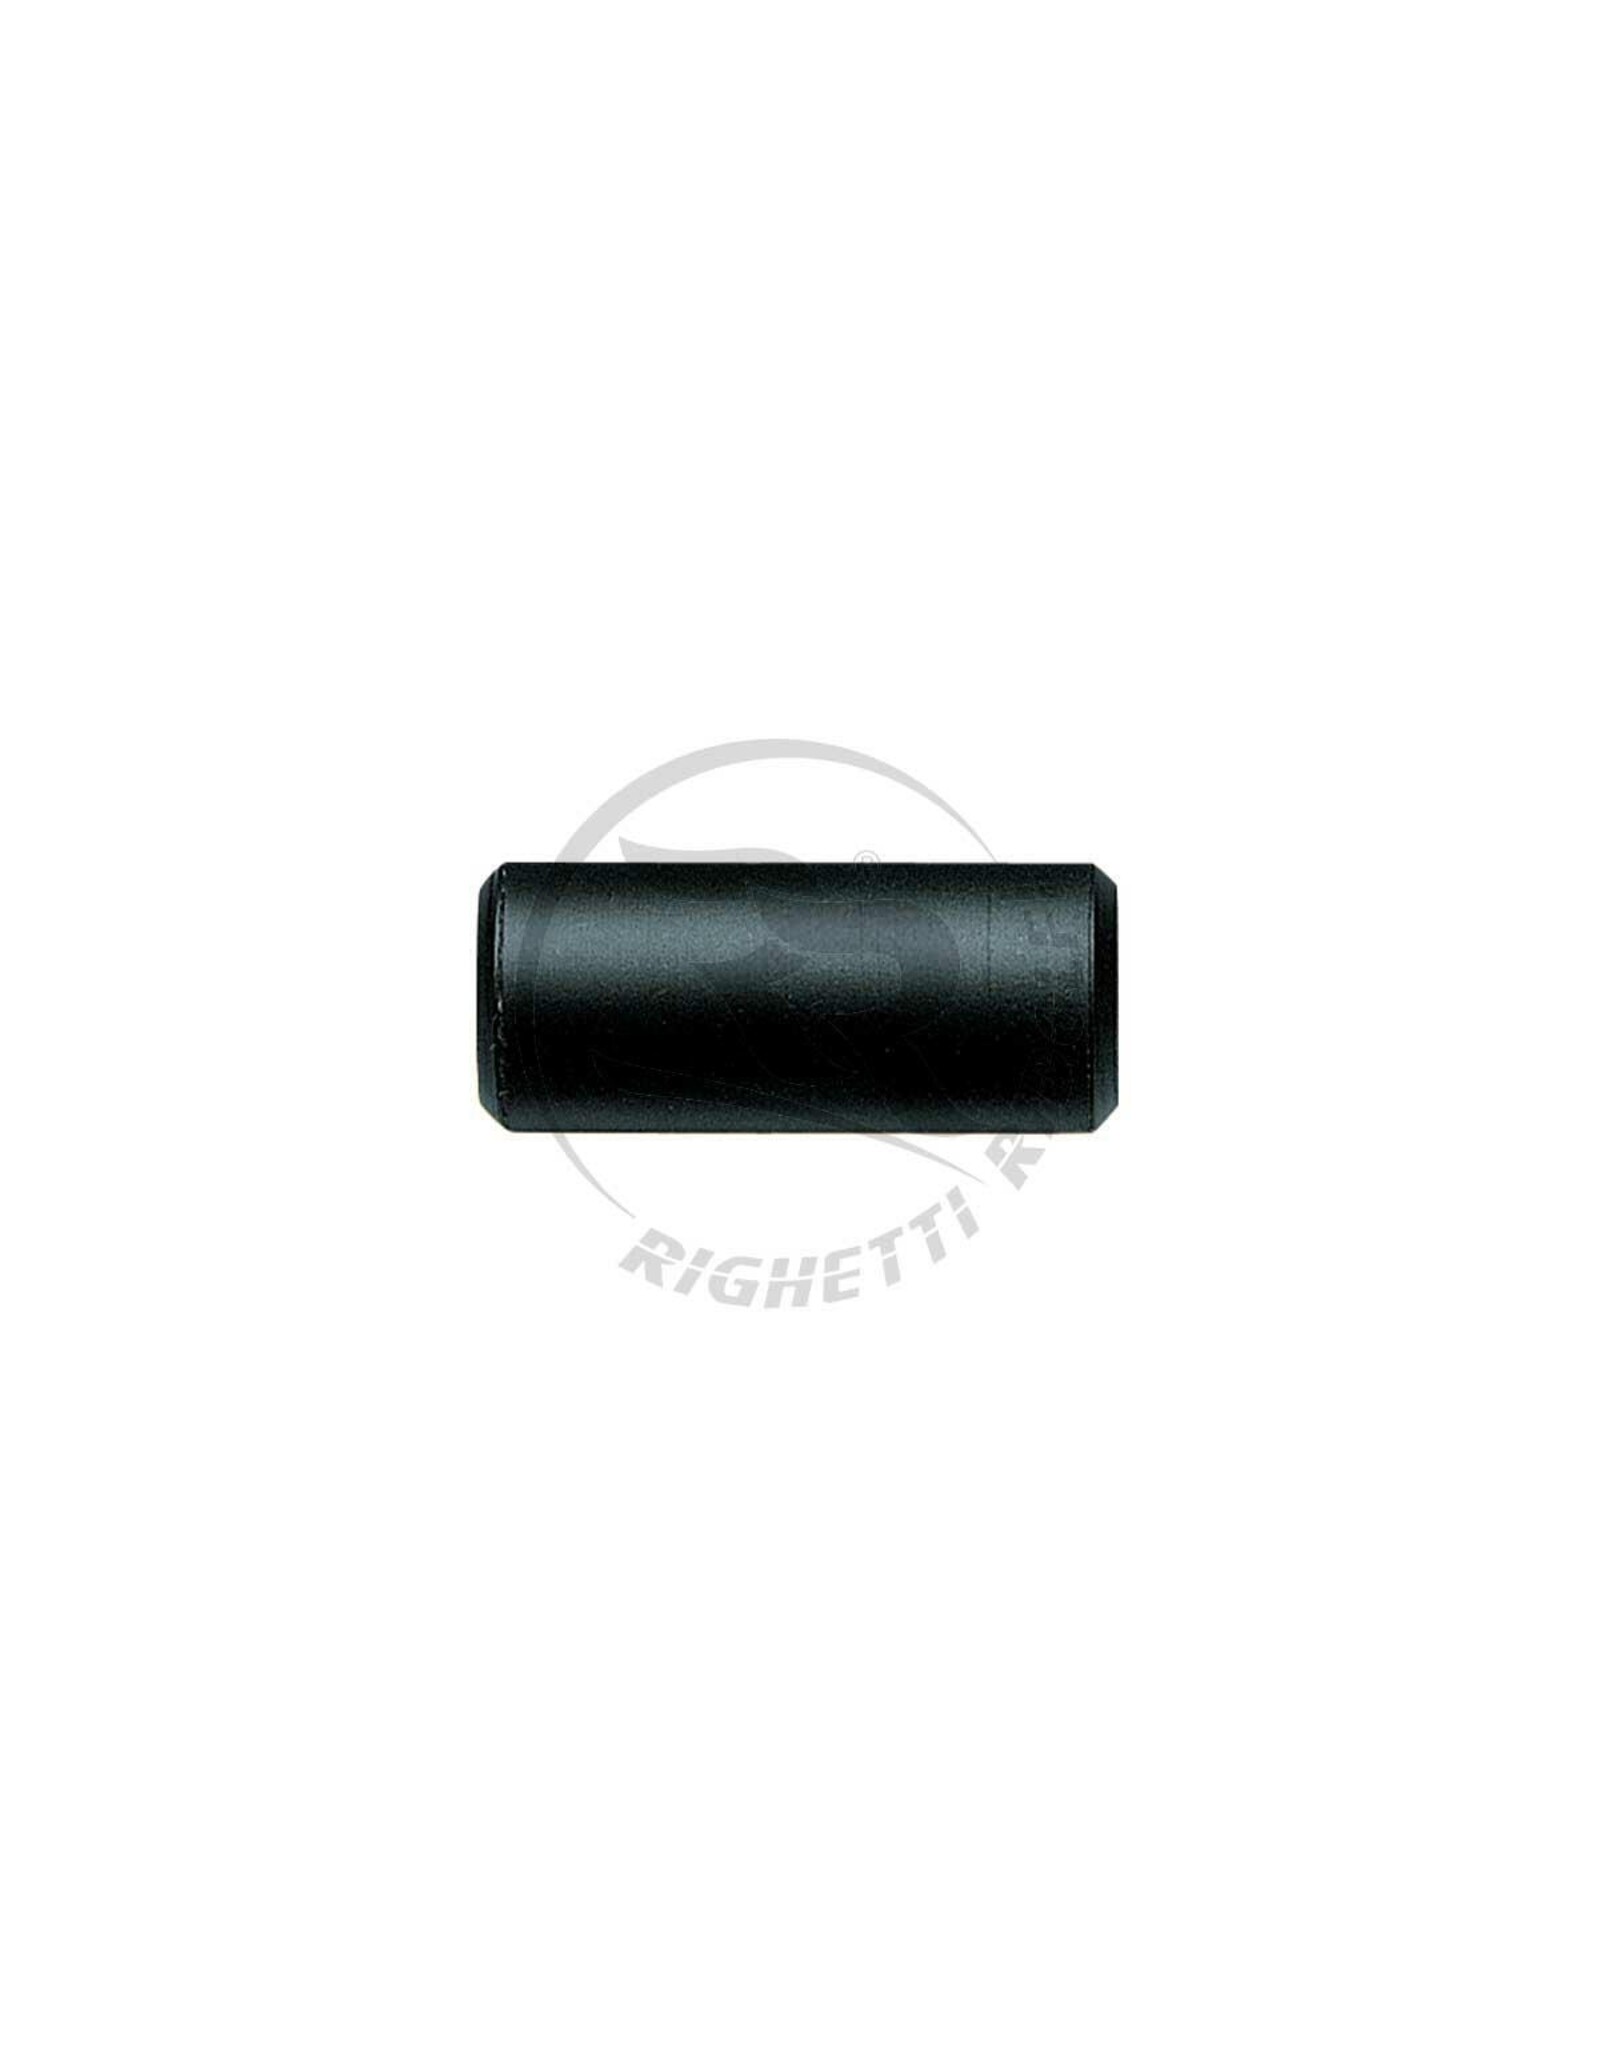 Righetti Ridolfi RR Rear bumper rubber for 32MM frame